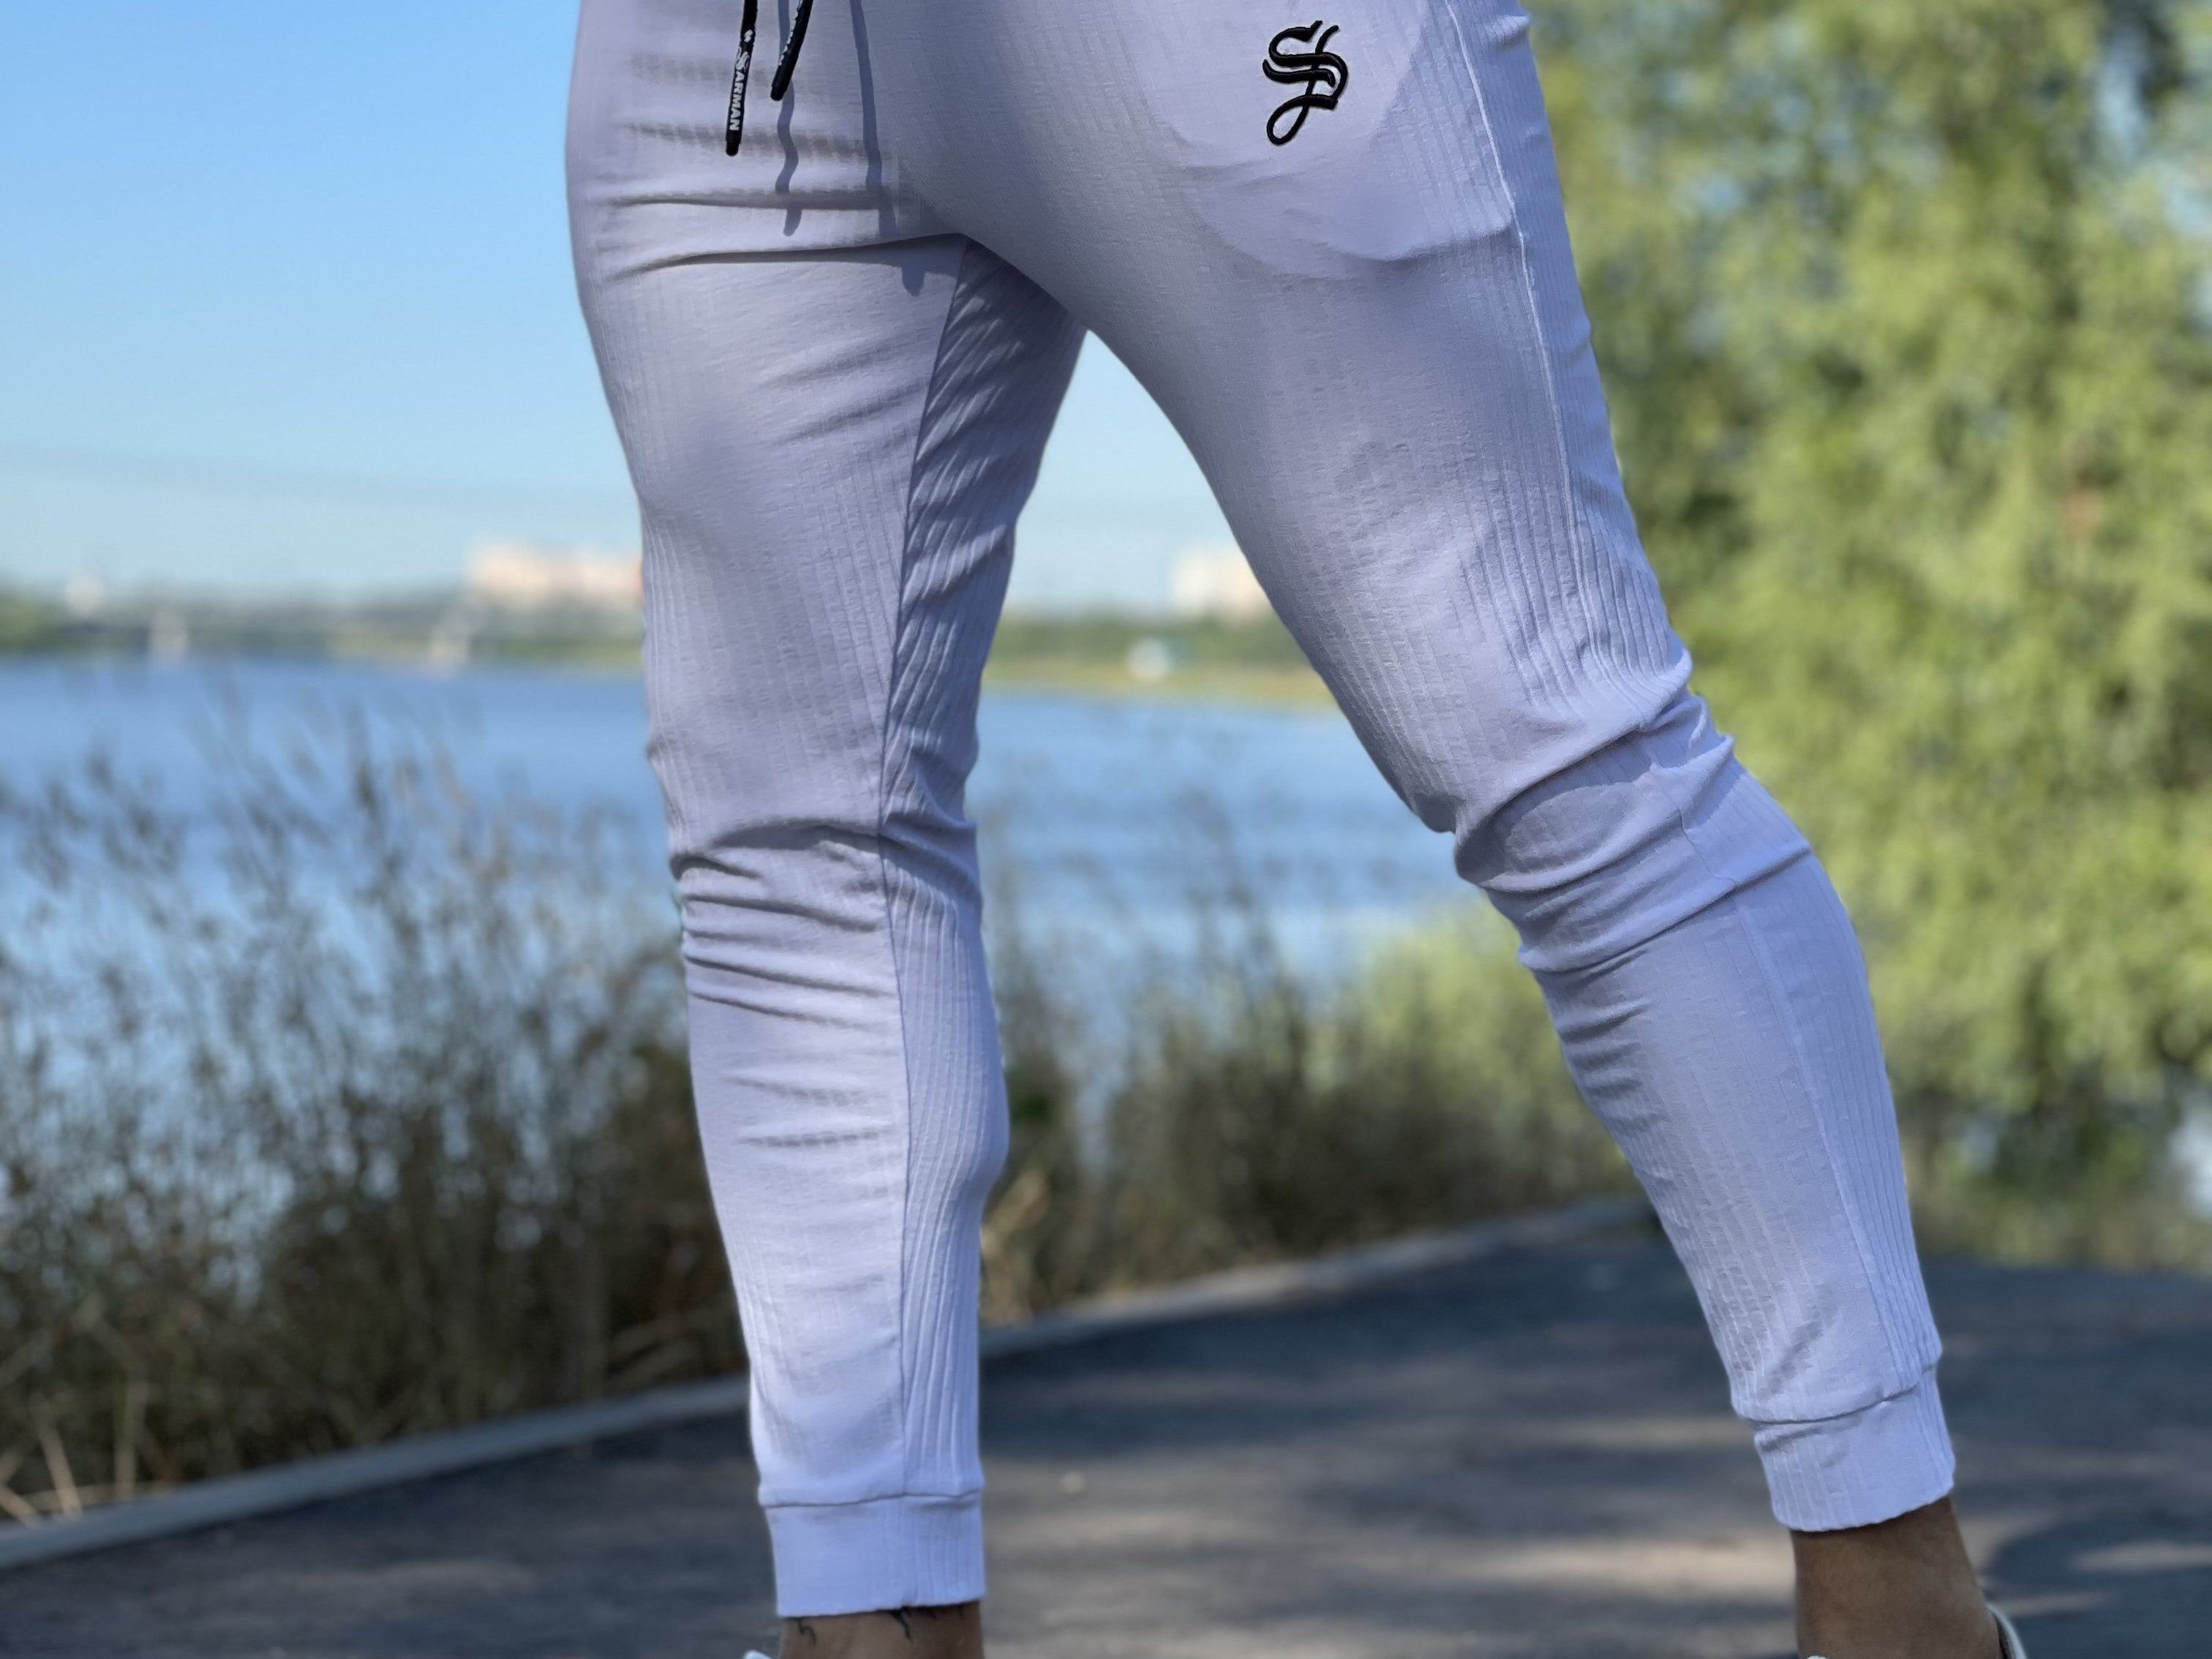 Mendoza - White Joggers for Men - Sarman Fashion - Wholesale Clothing Fashion Brand for Men from Canada